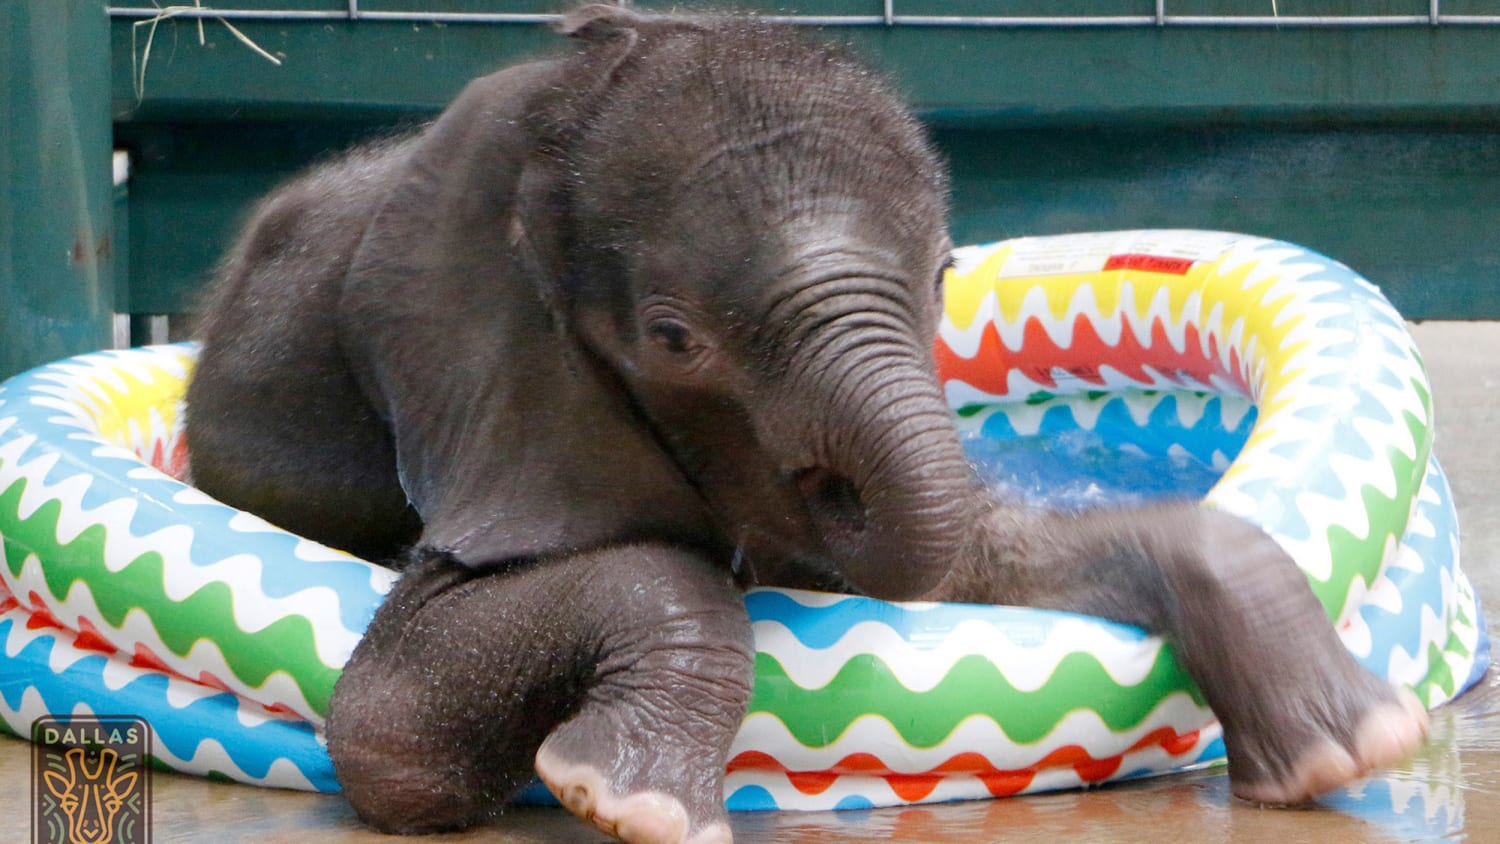 Baby elephant plays in a kiddie pool